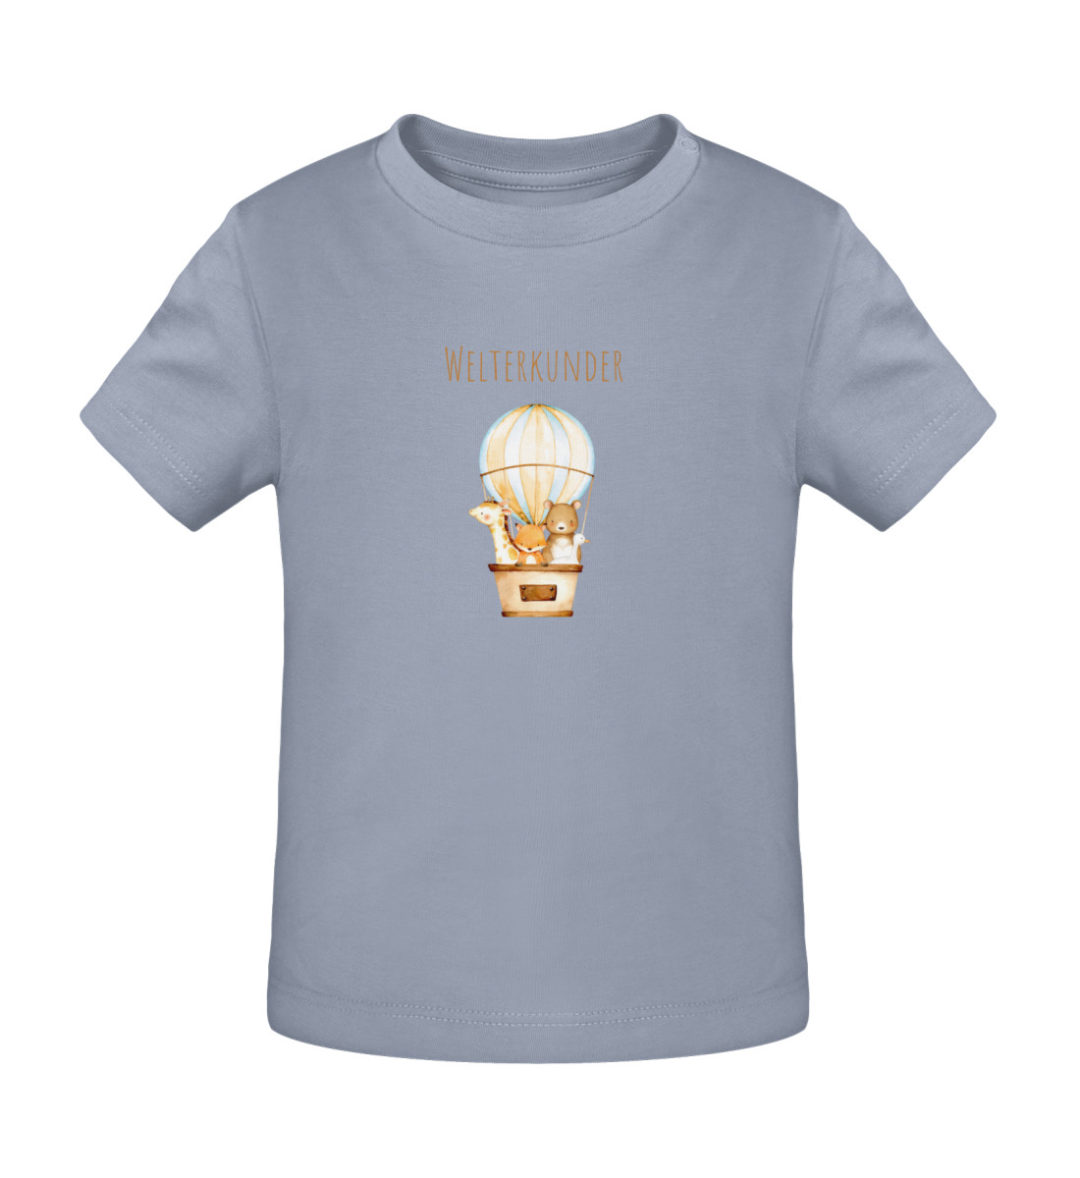 Welterkunder - Baby Creator T-Shirt ST/ST-7086